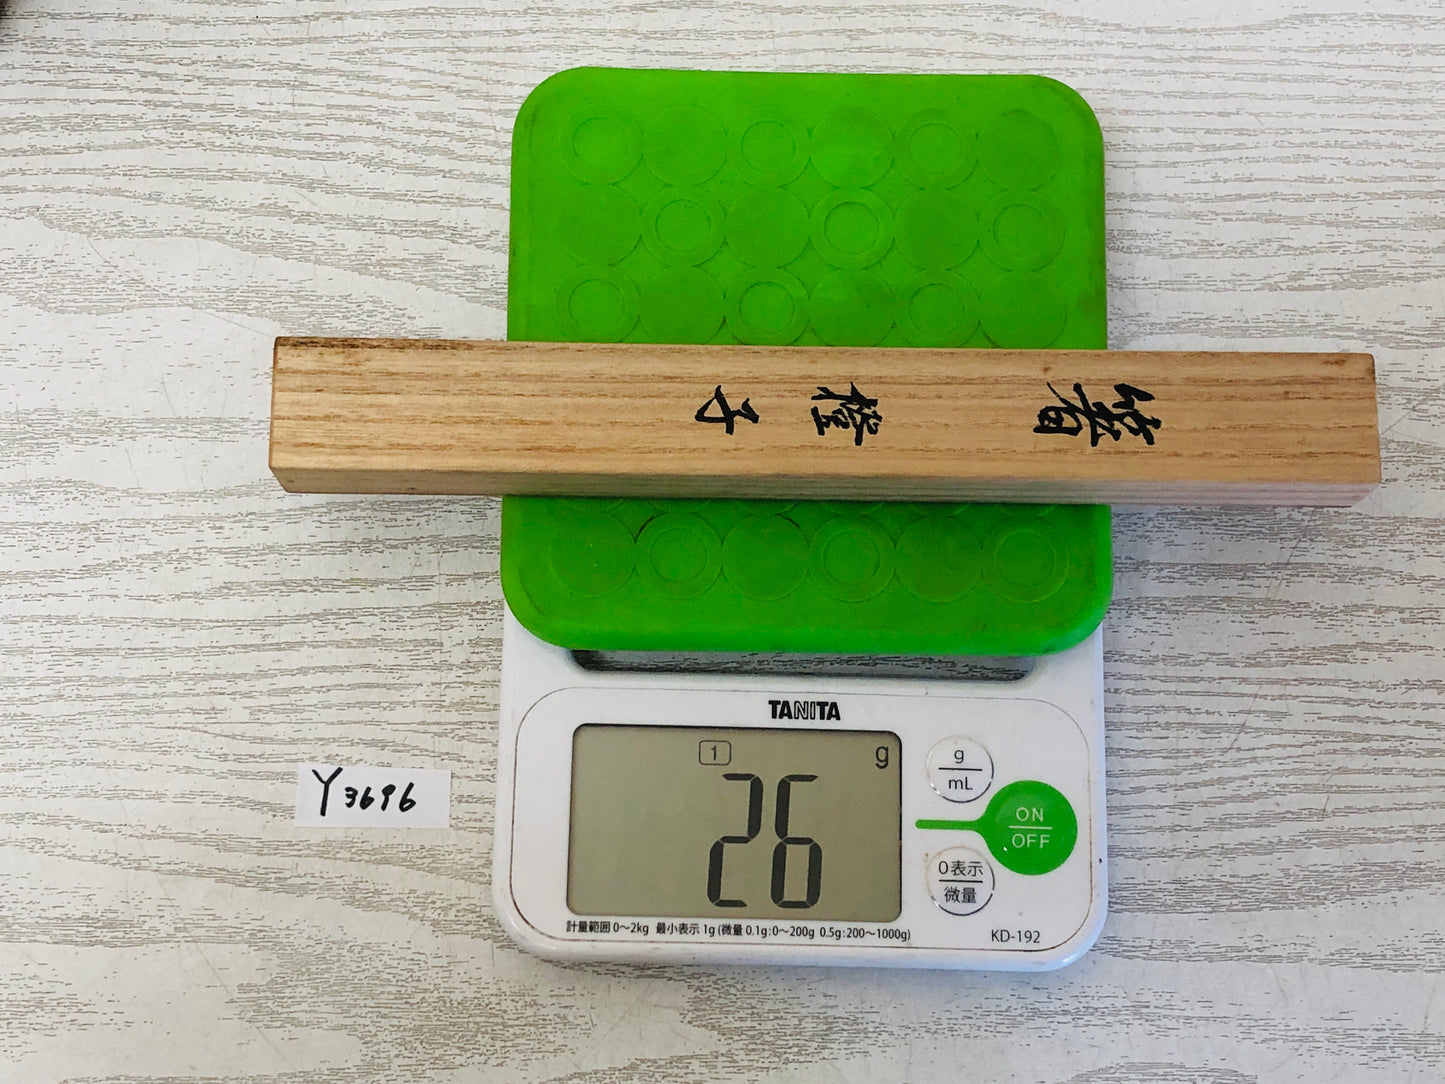 Y3696 HASHI Bamboo Chopsticks signed box Japan antique vintage tableware